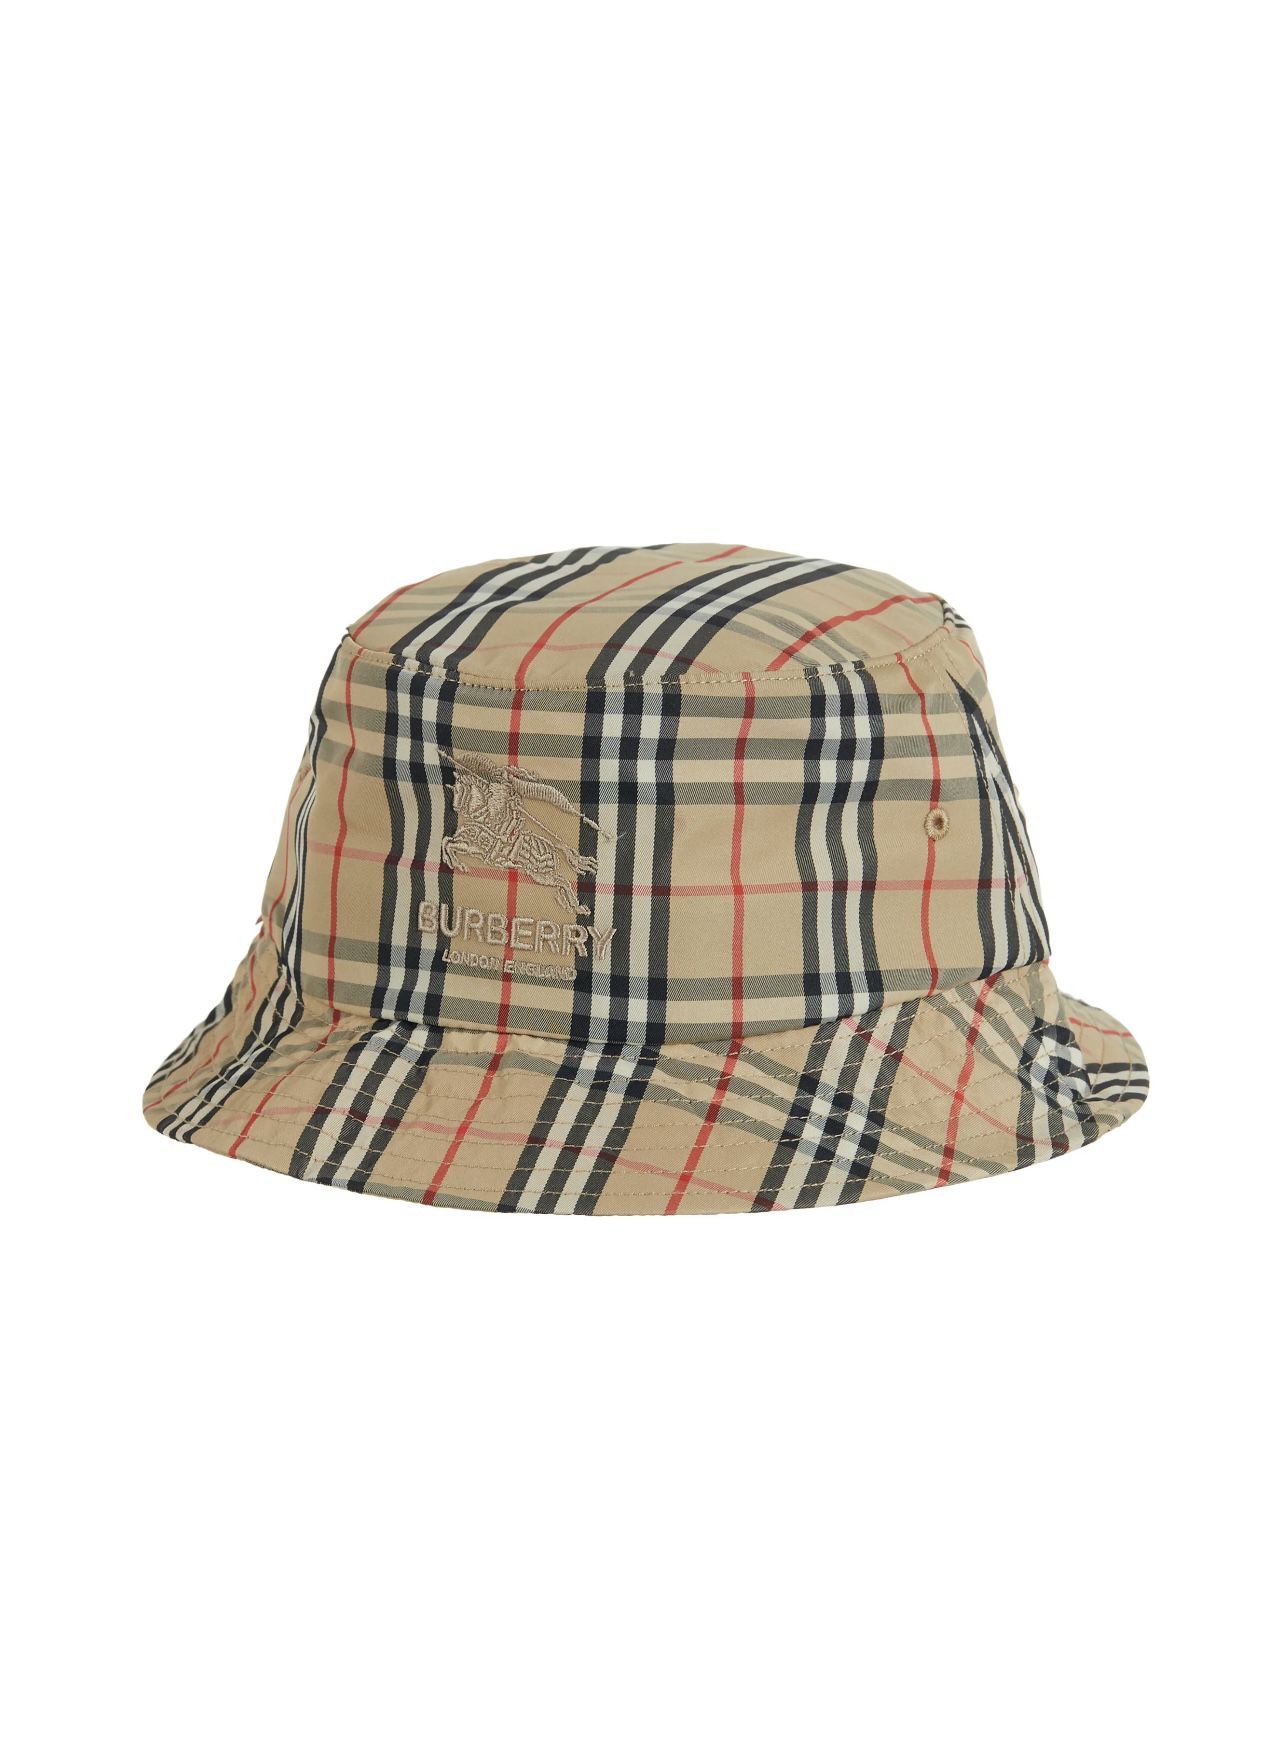 Supreme Burberry Crusher Bucket Hat Beige Size M/L